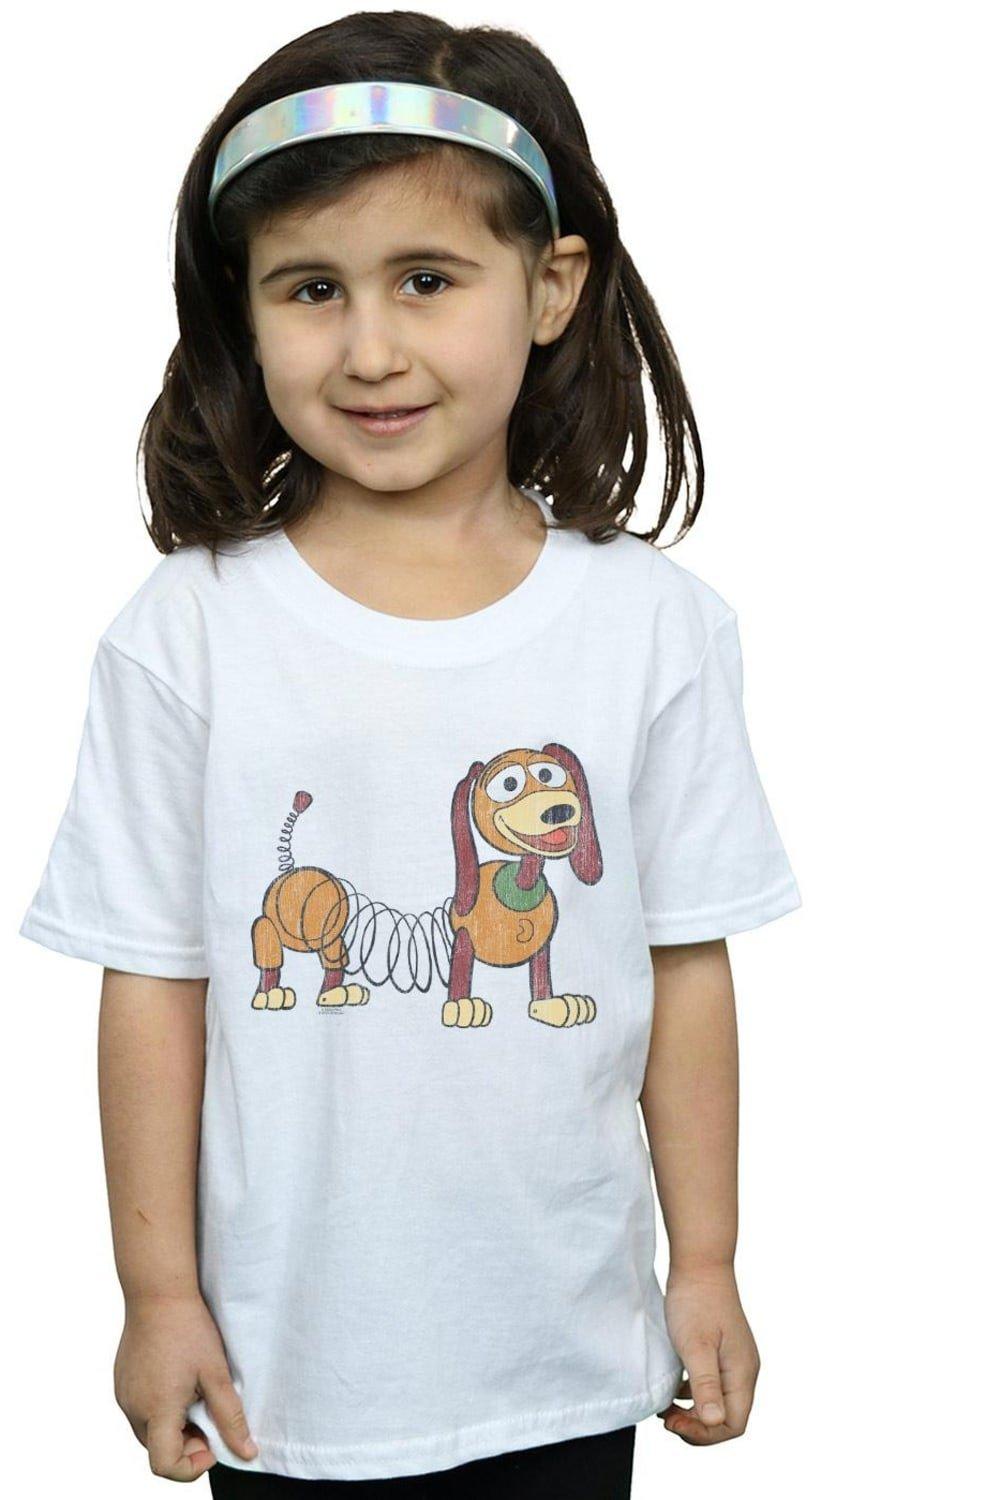 Toy Story 4 Slinky Pose Cotton T-Shirt